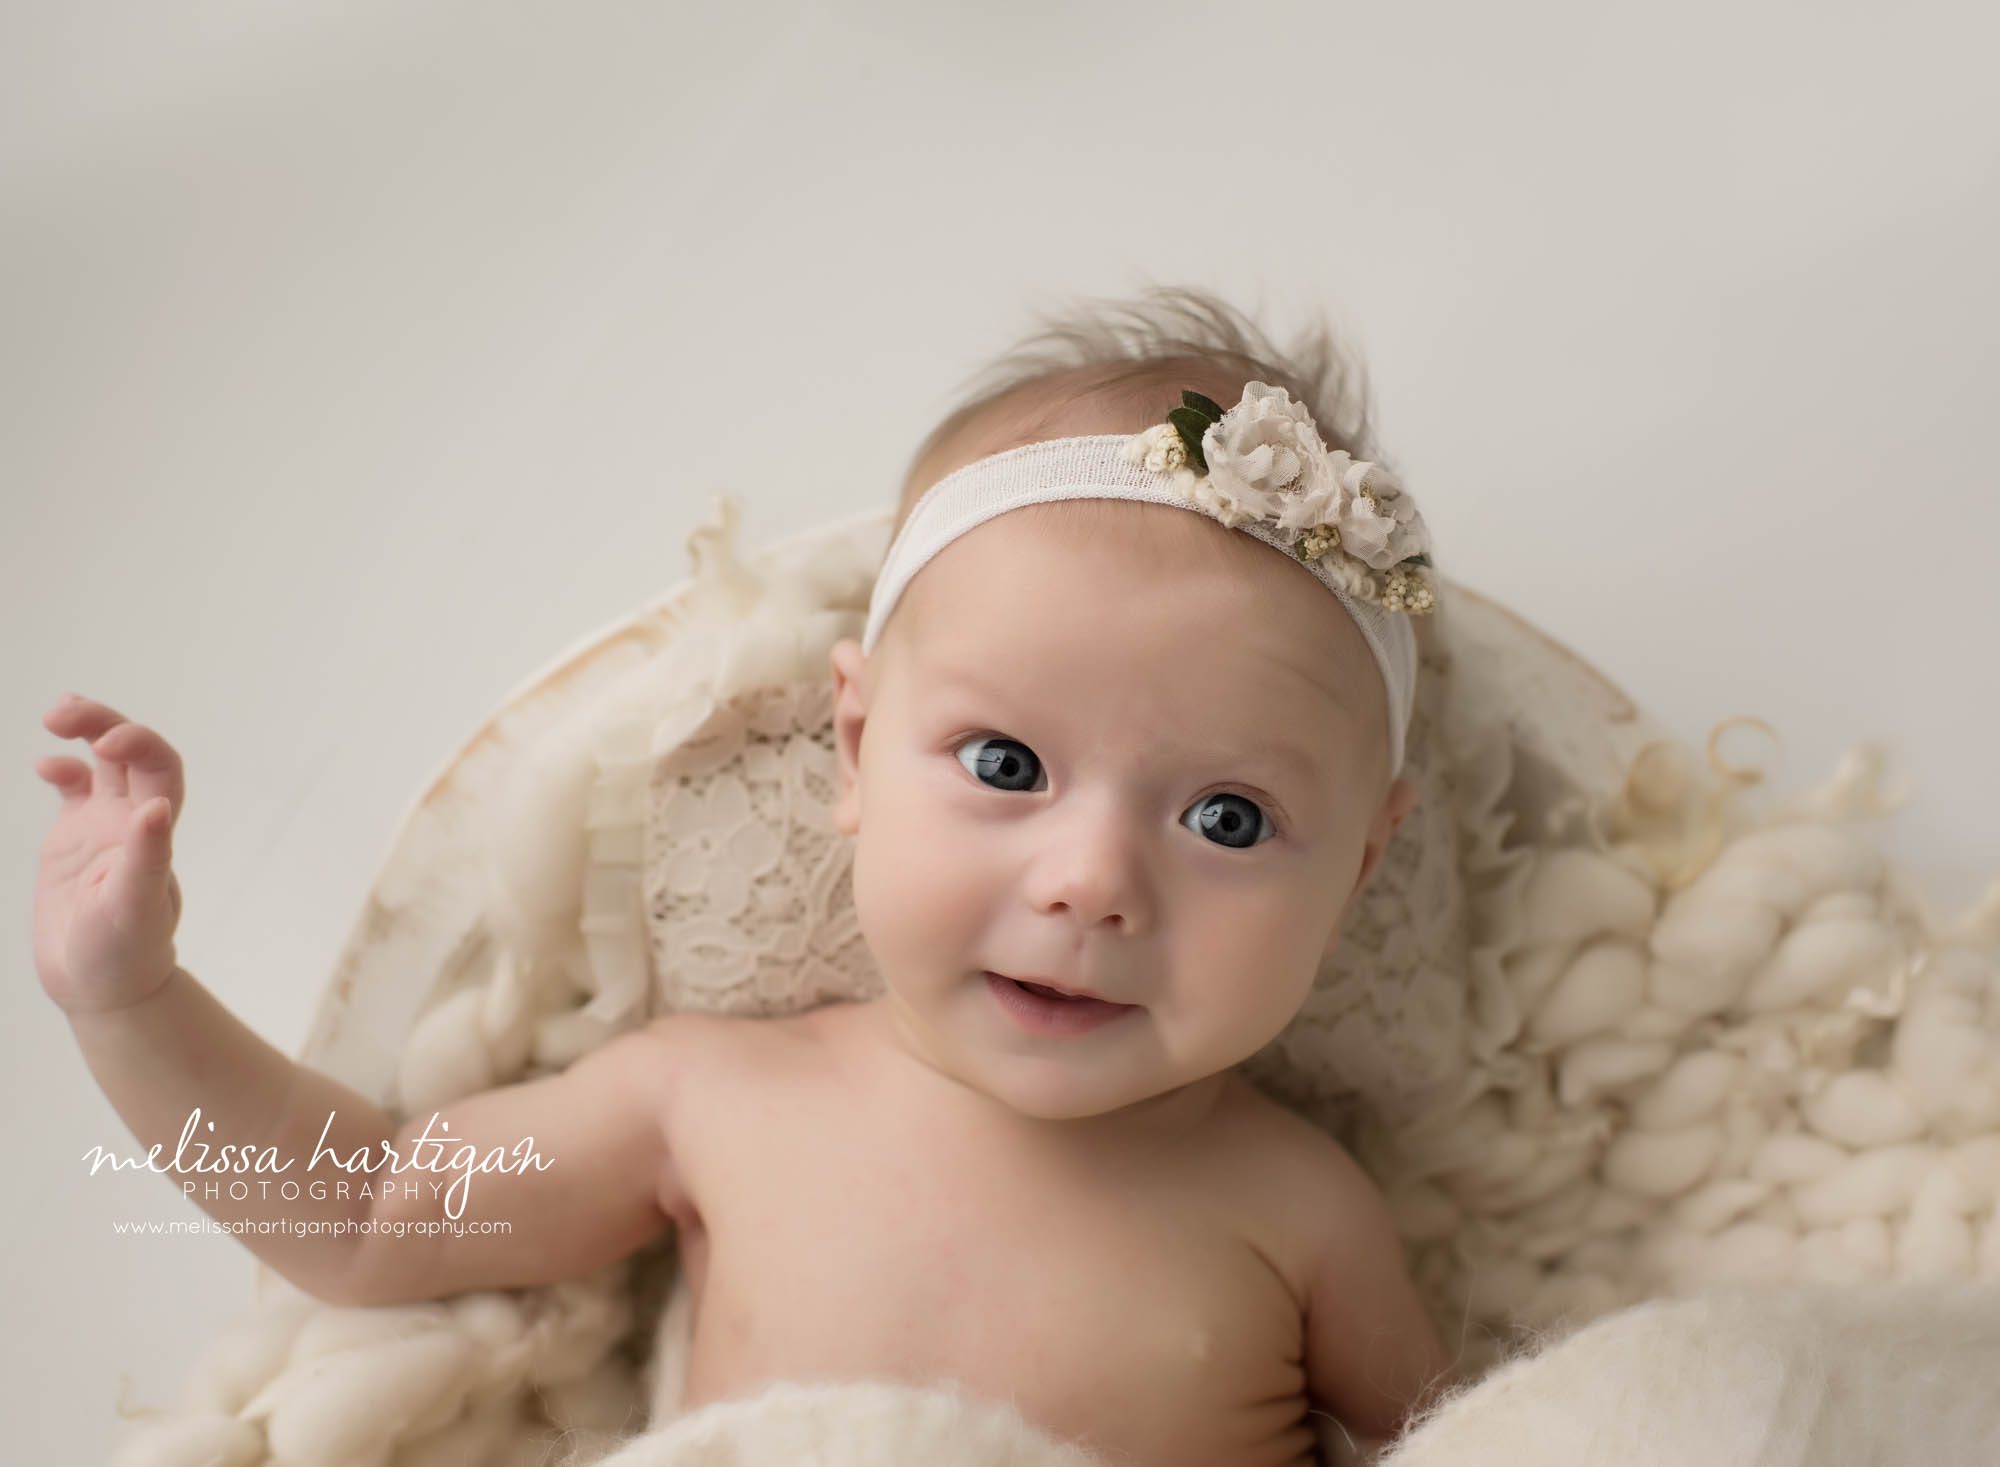 awake newborn baby girl picture with cream layer wrap Best CT newborn photographer Best CT newborn photography